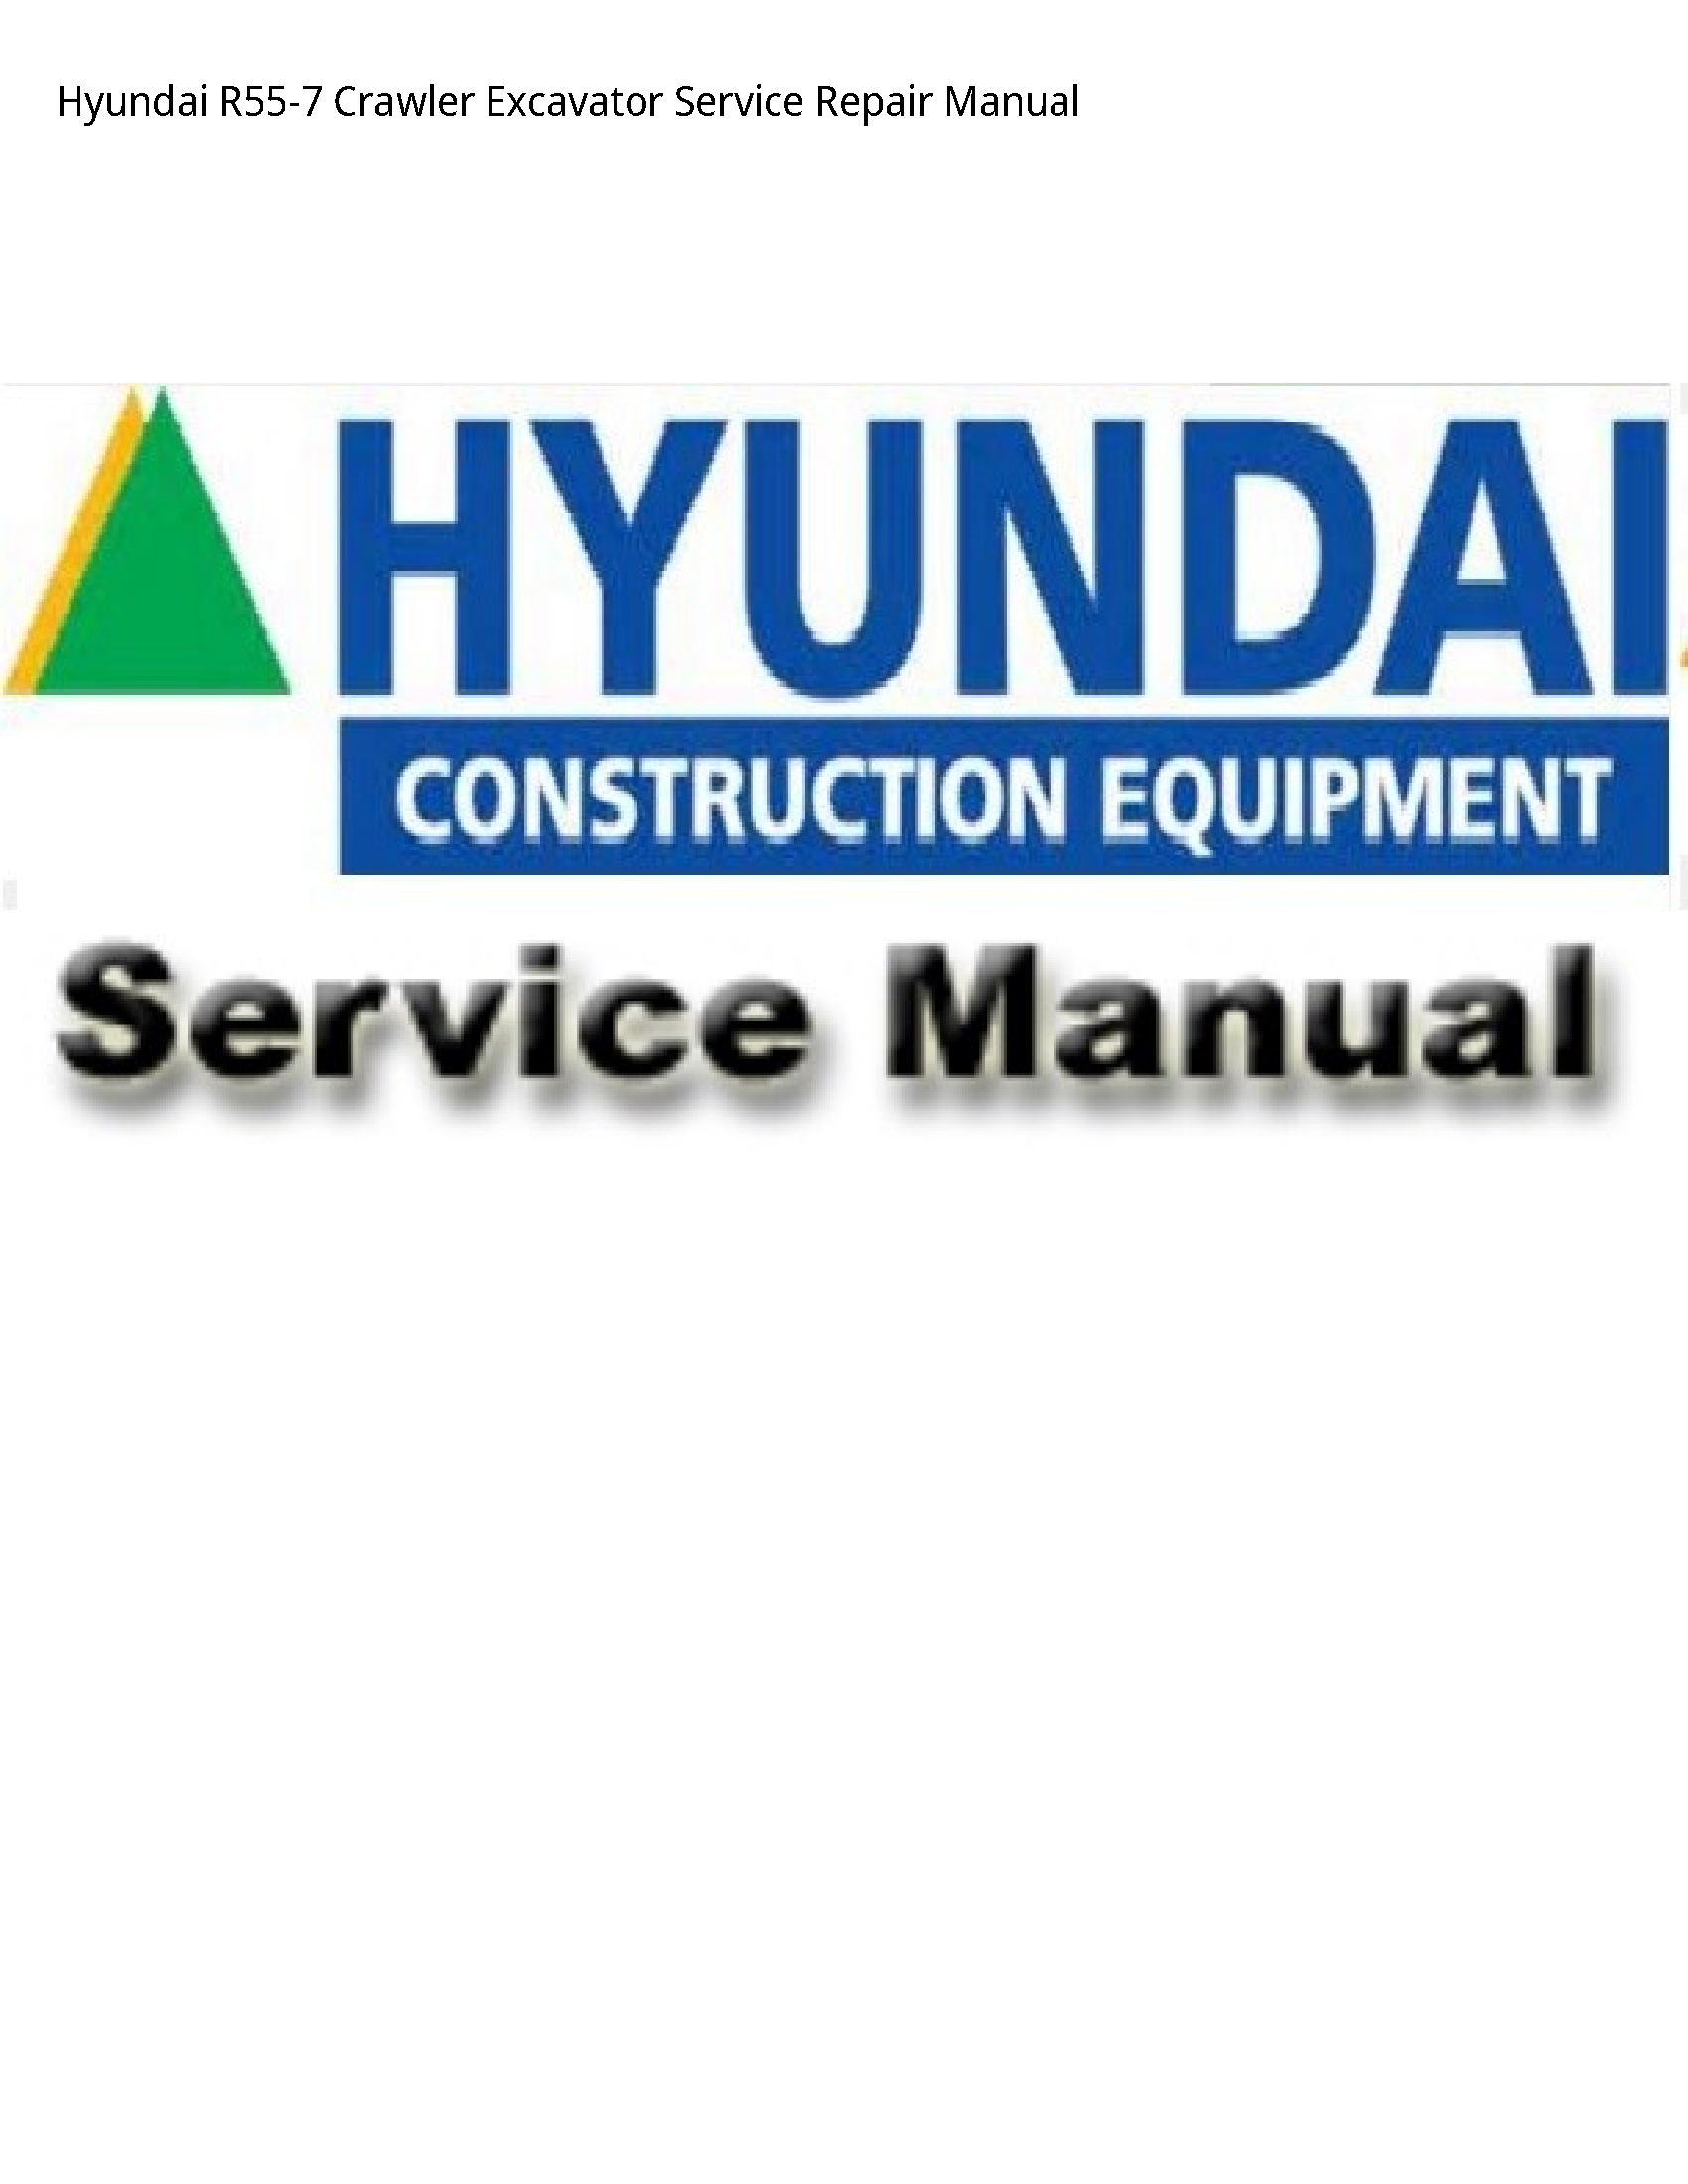 Hyundai R55-7 Crawler Excavator manual